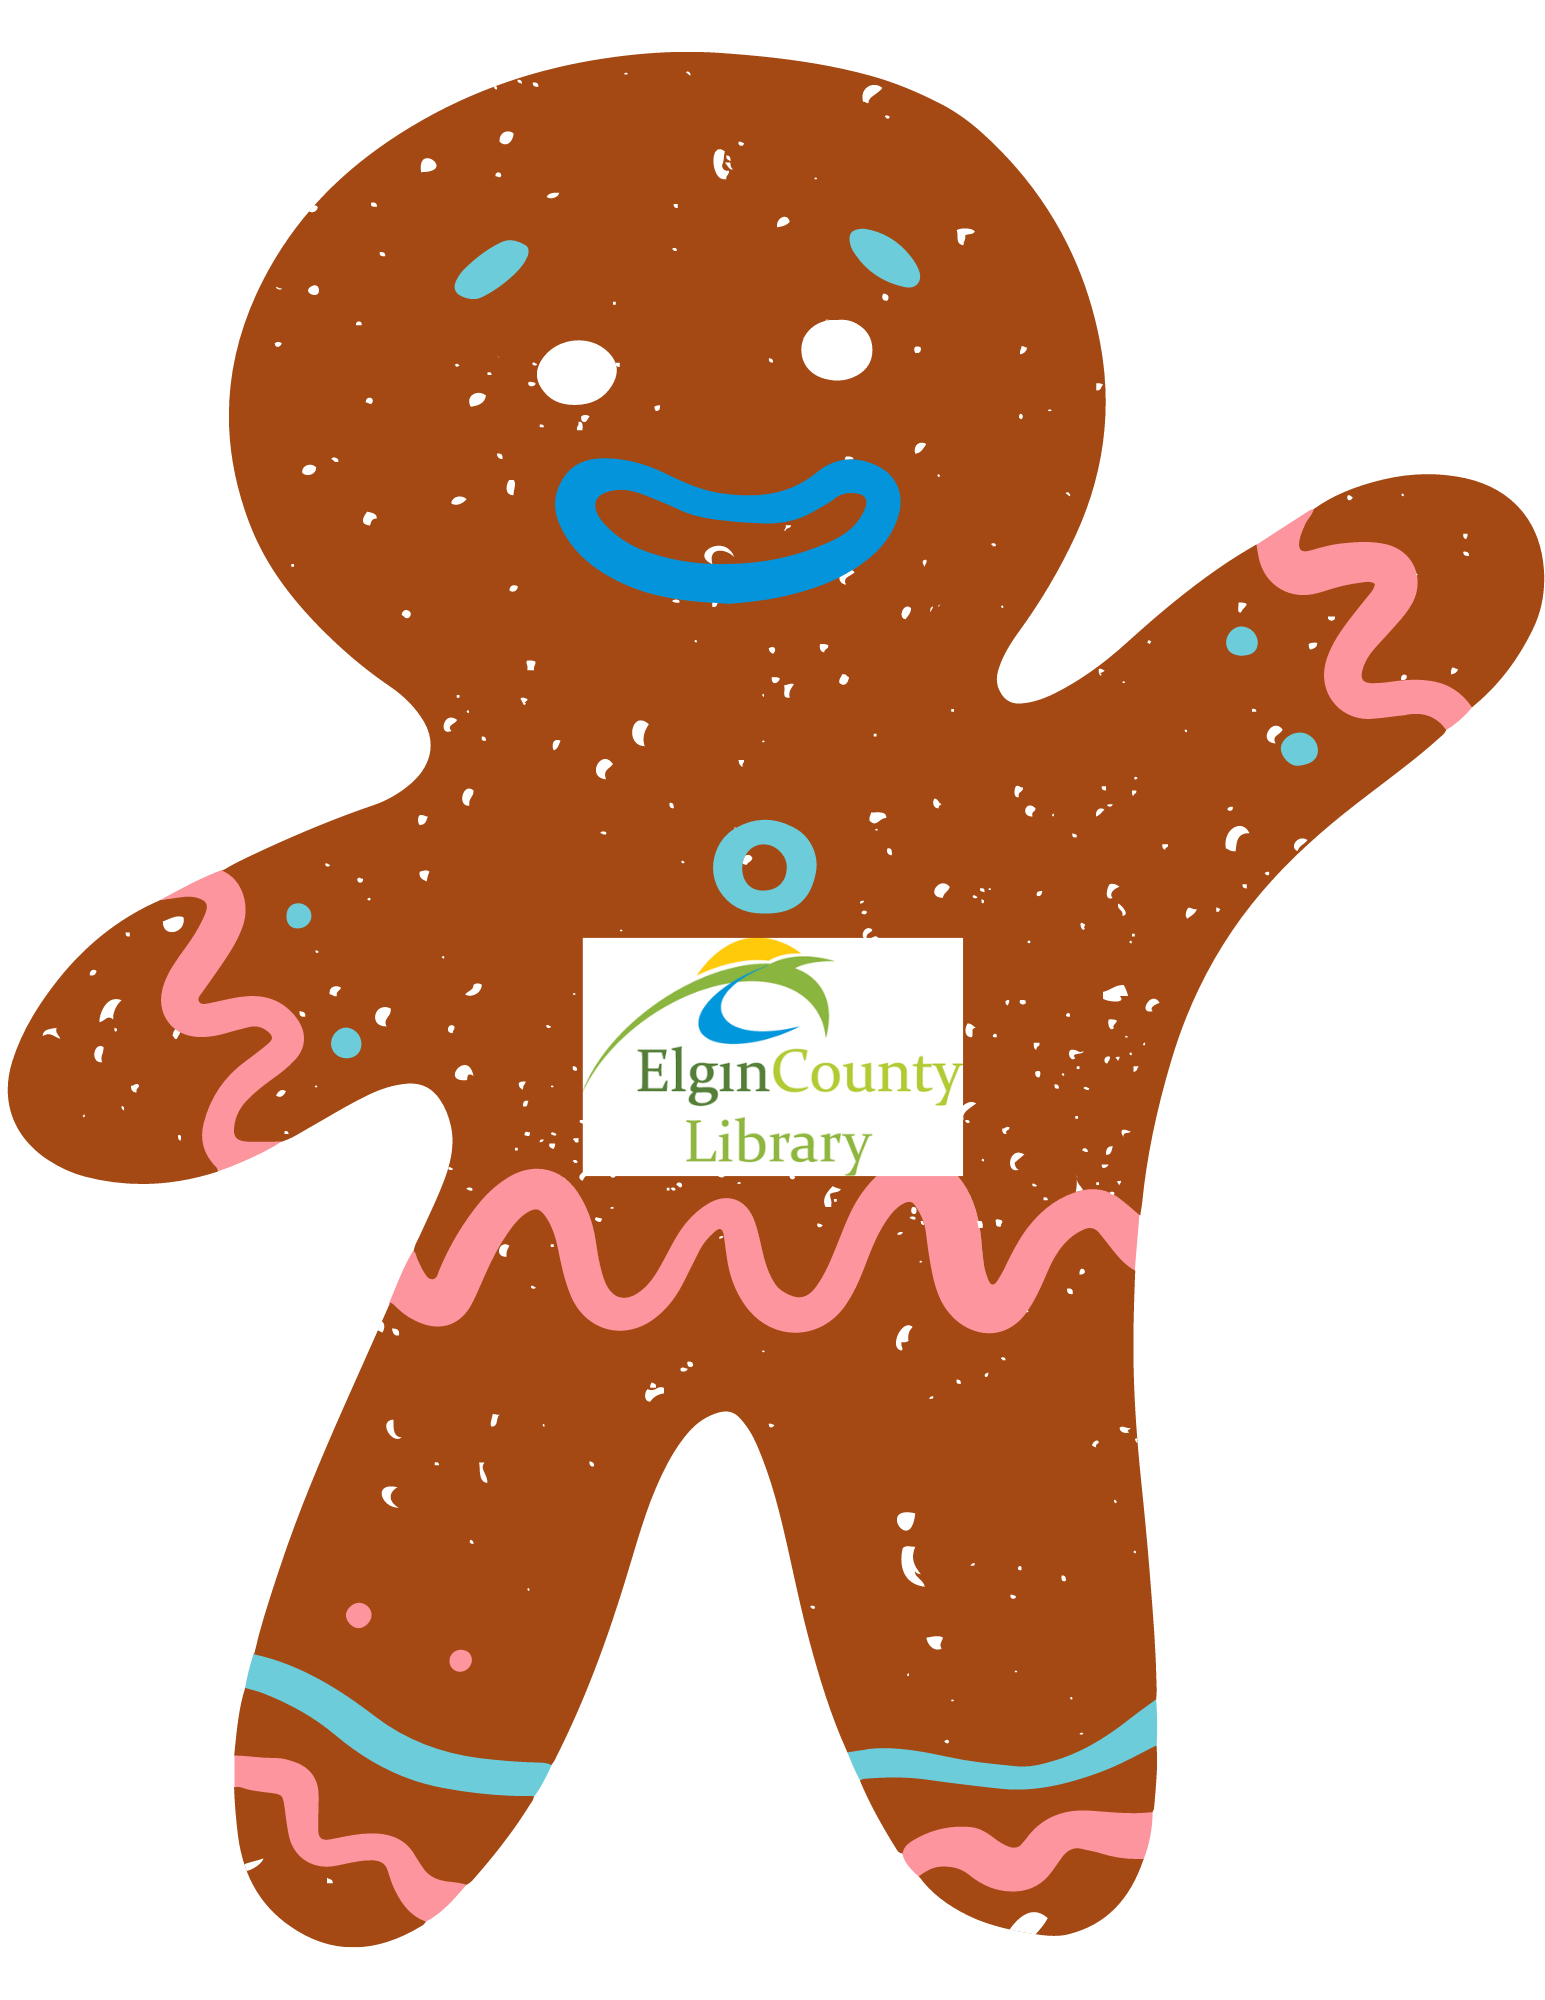 a gingerbread man